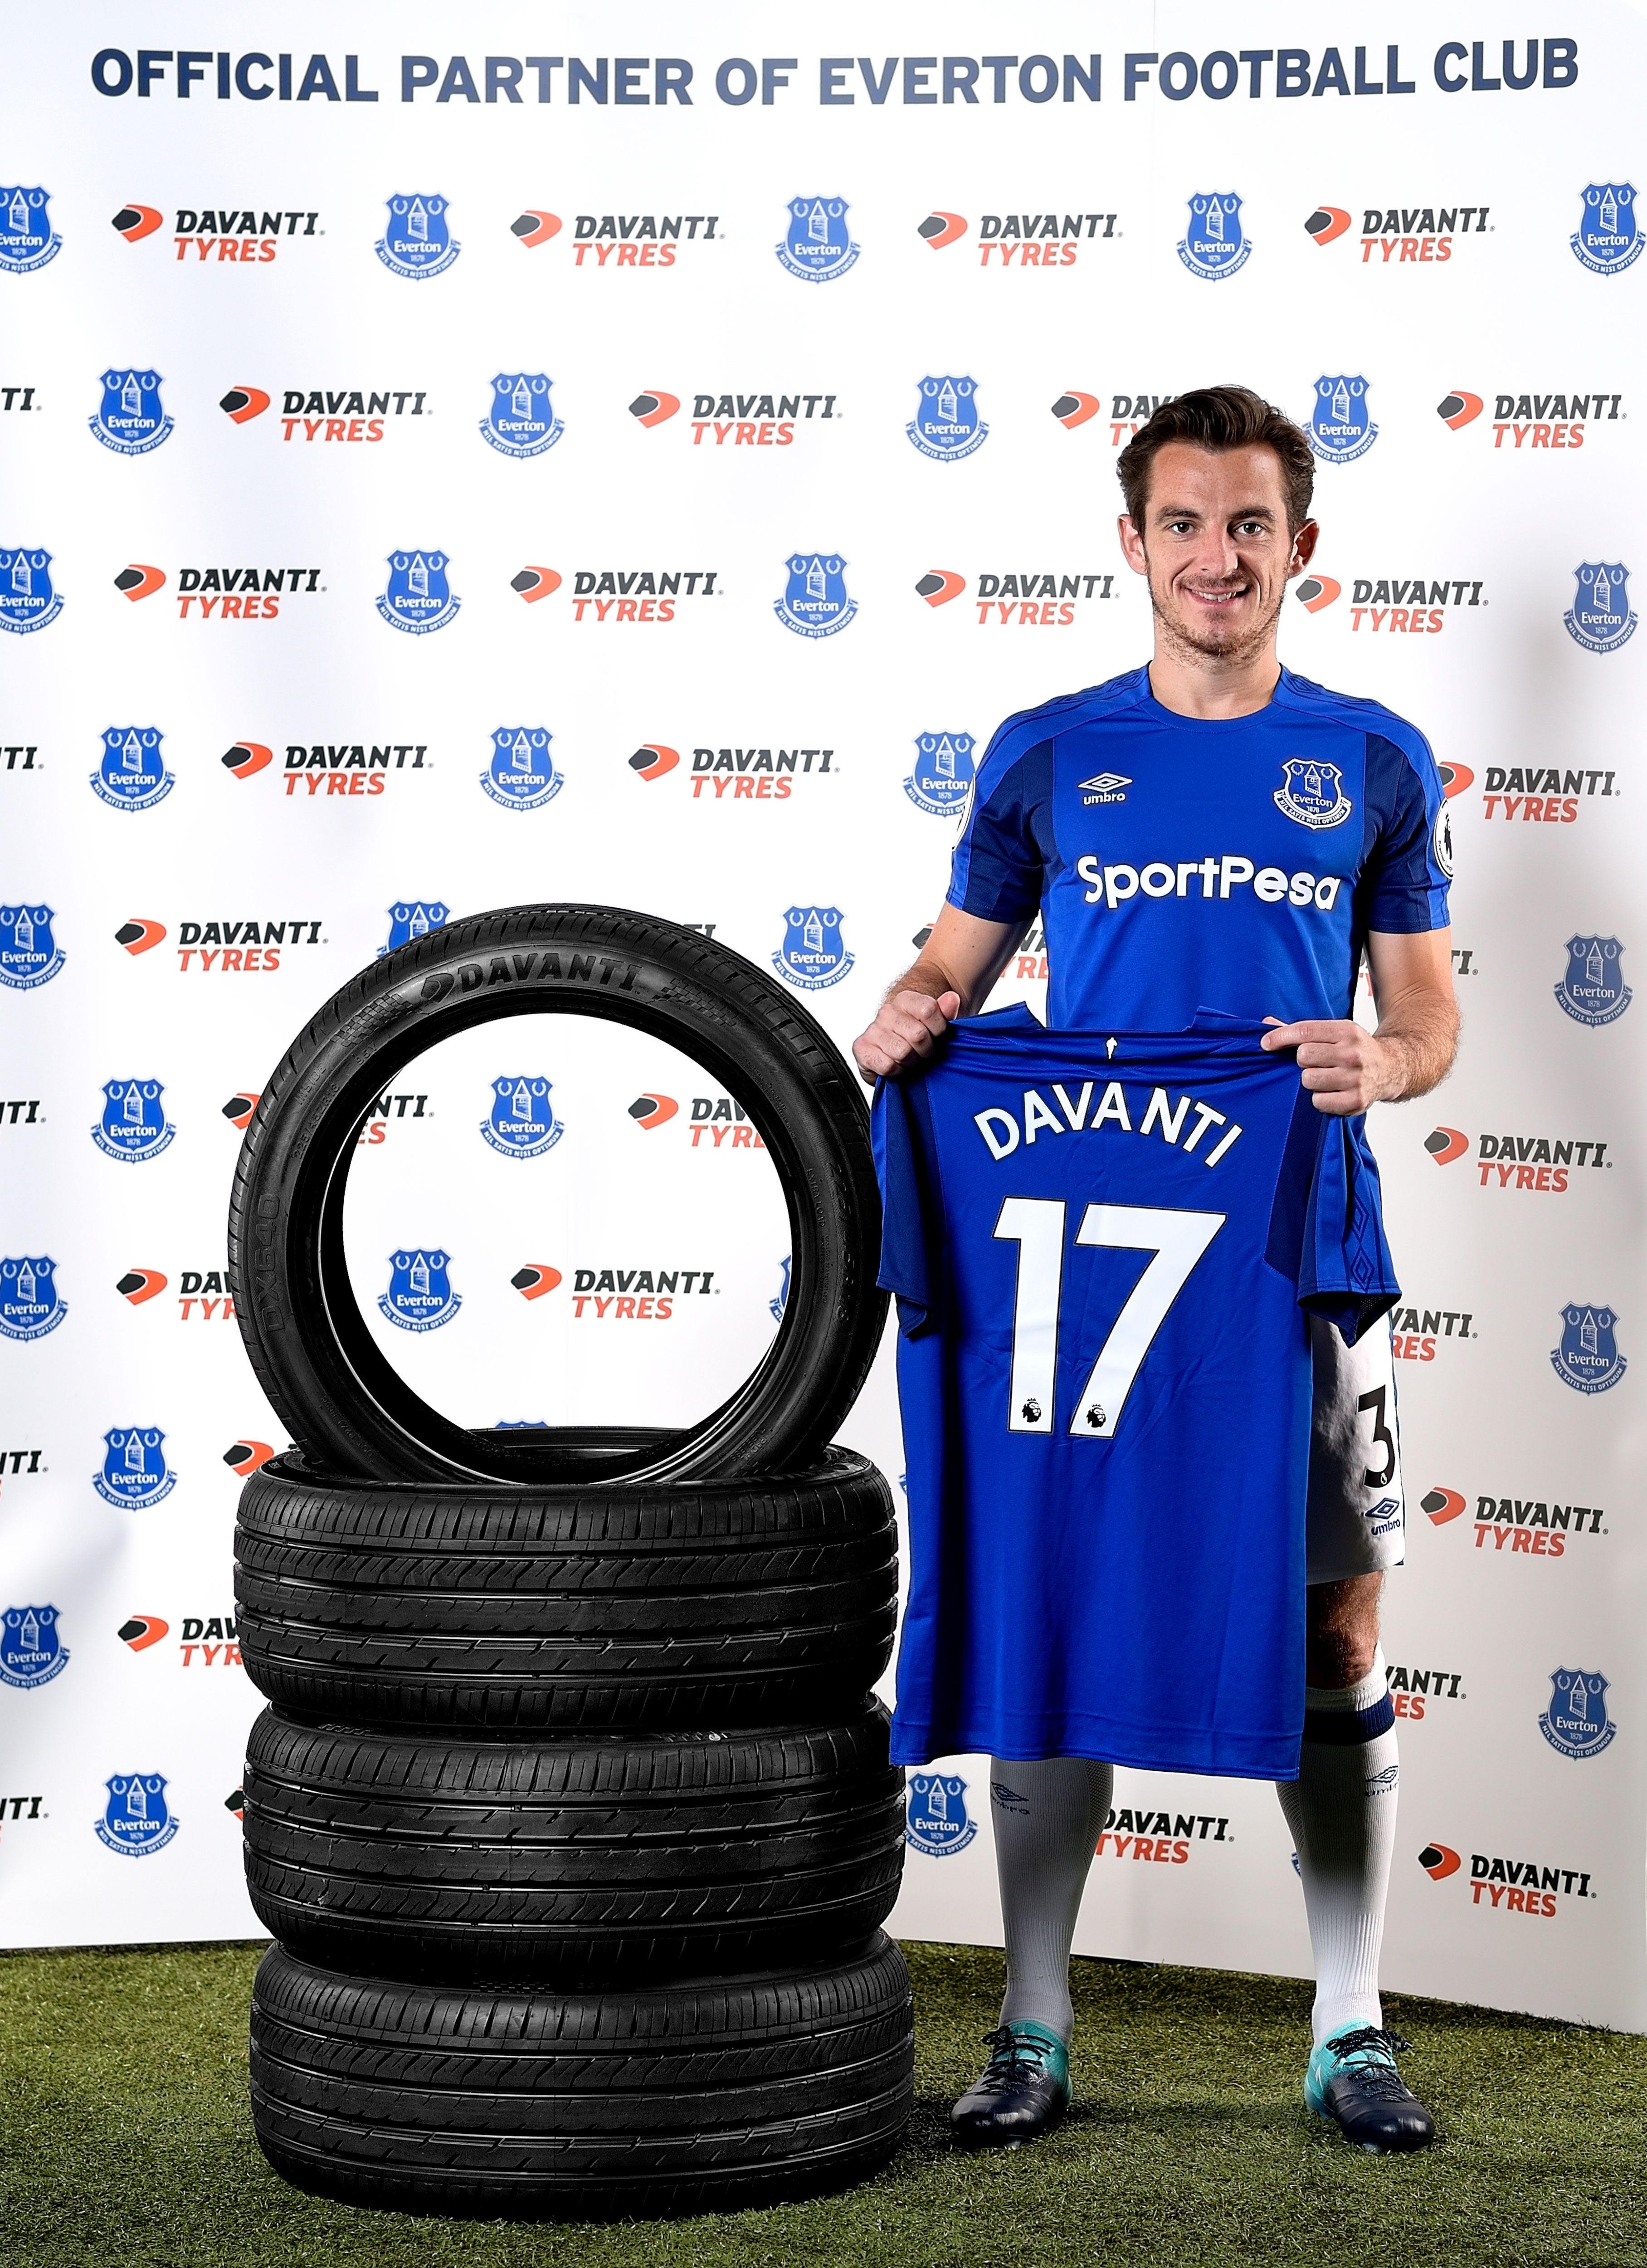 Davanti Tyres signs three-year partnership with Everton Football Club